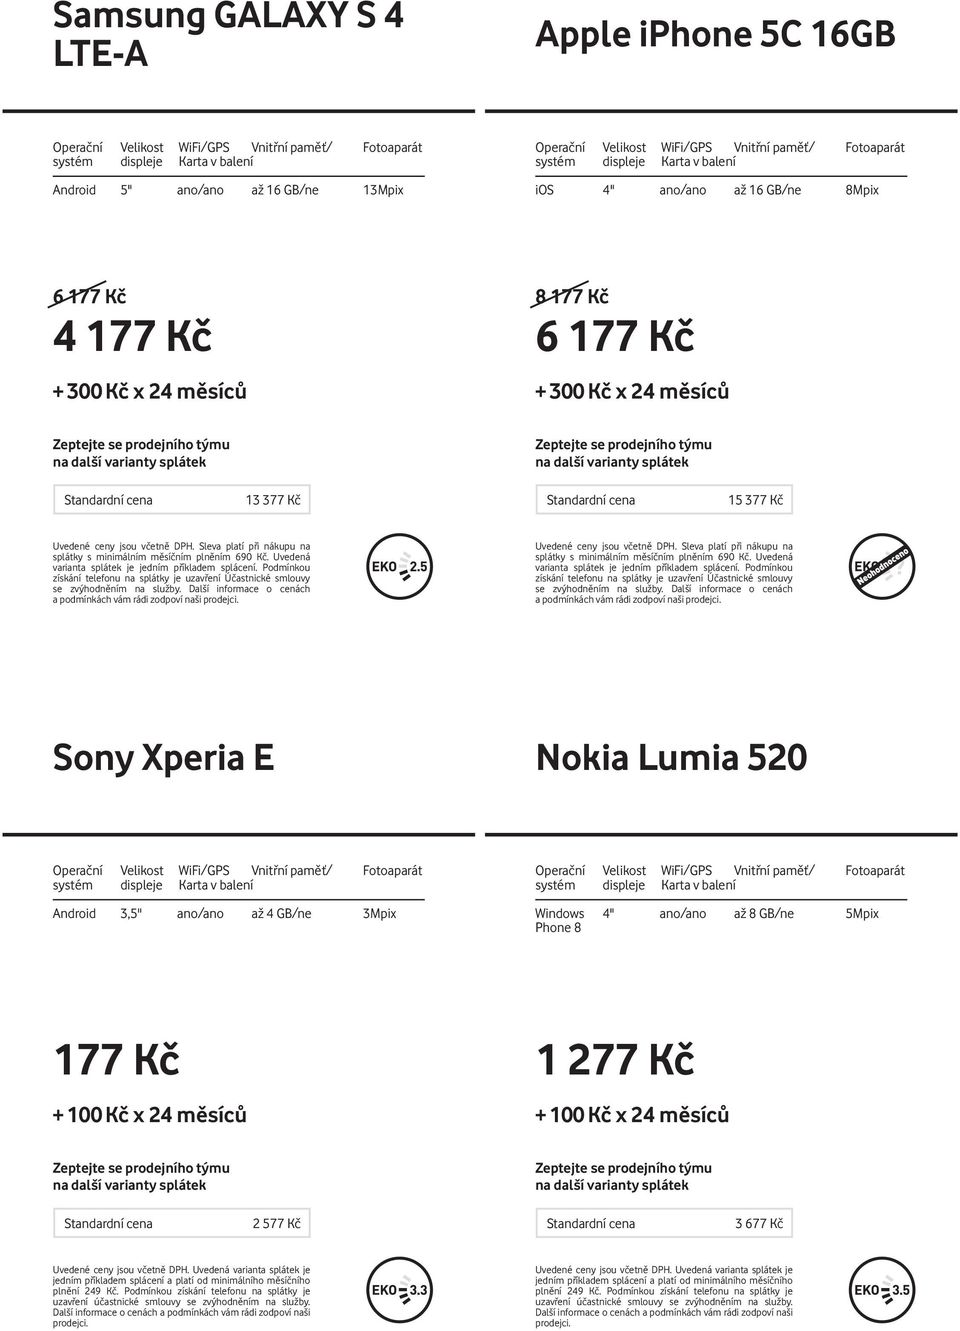 zodpoví naši a podmínkách vám rádi zodpoví naši Sony Xperia E Nokia Lumia 520